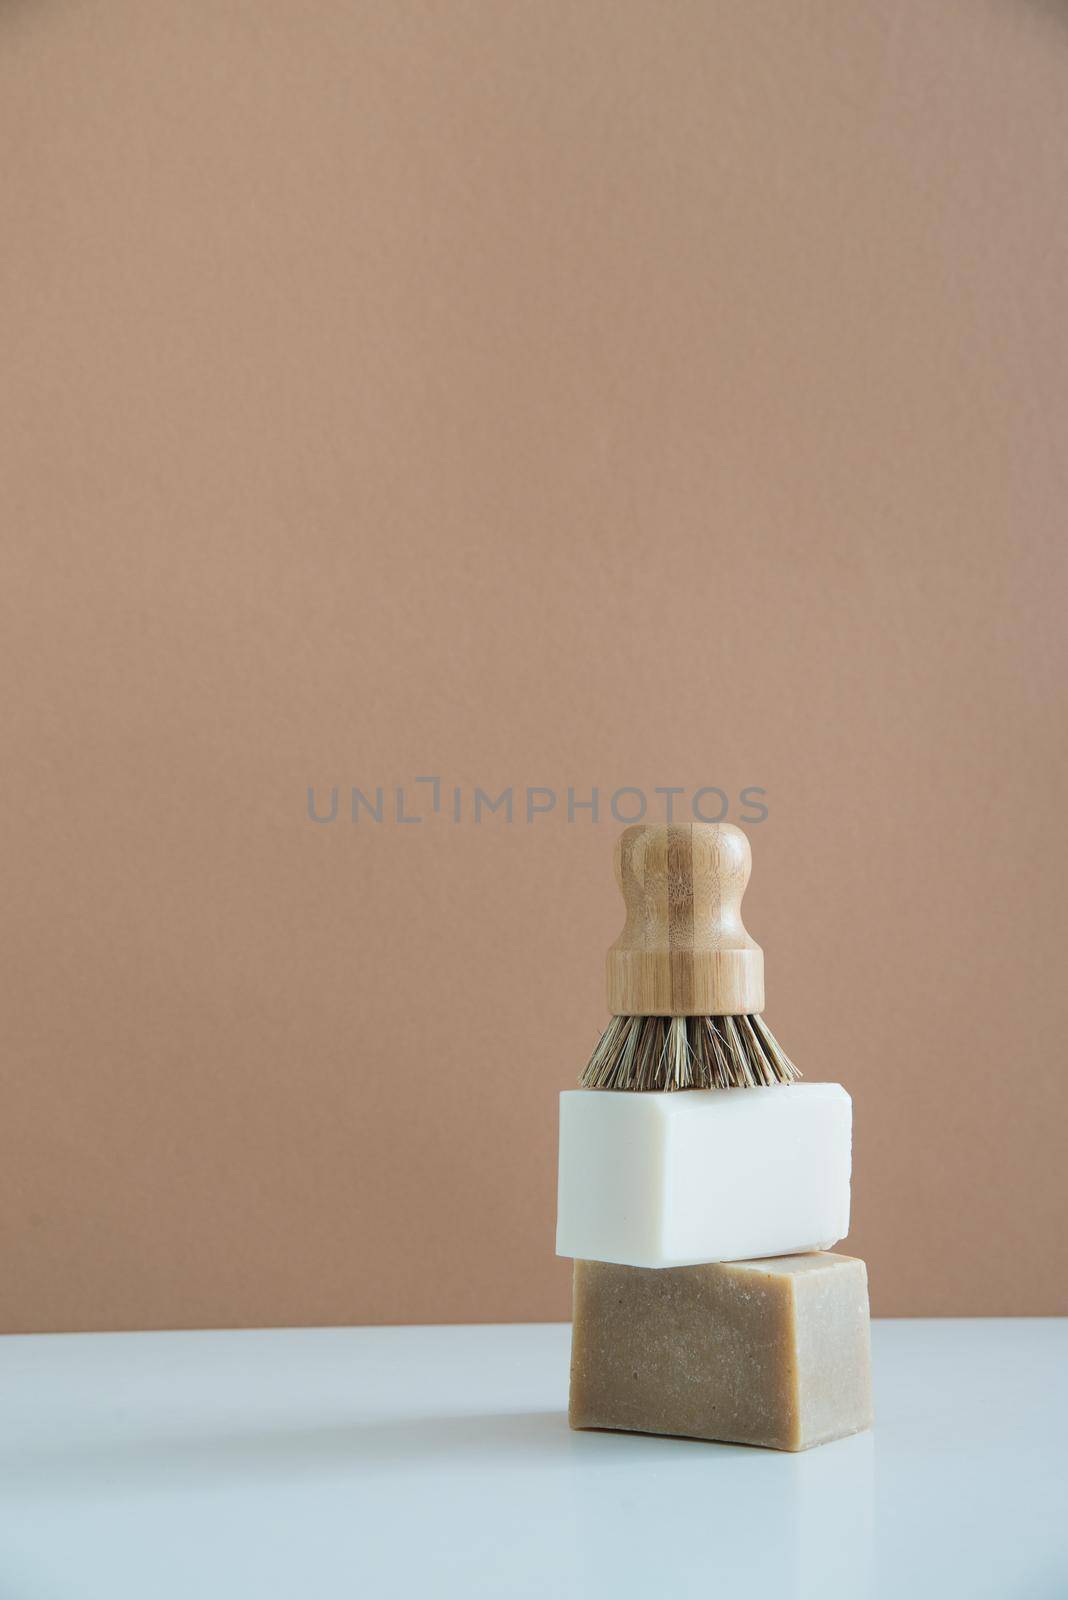 zero waste bamboo brush with soap for dishwashing in minimalistic style. High quality photo